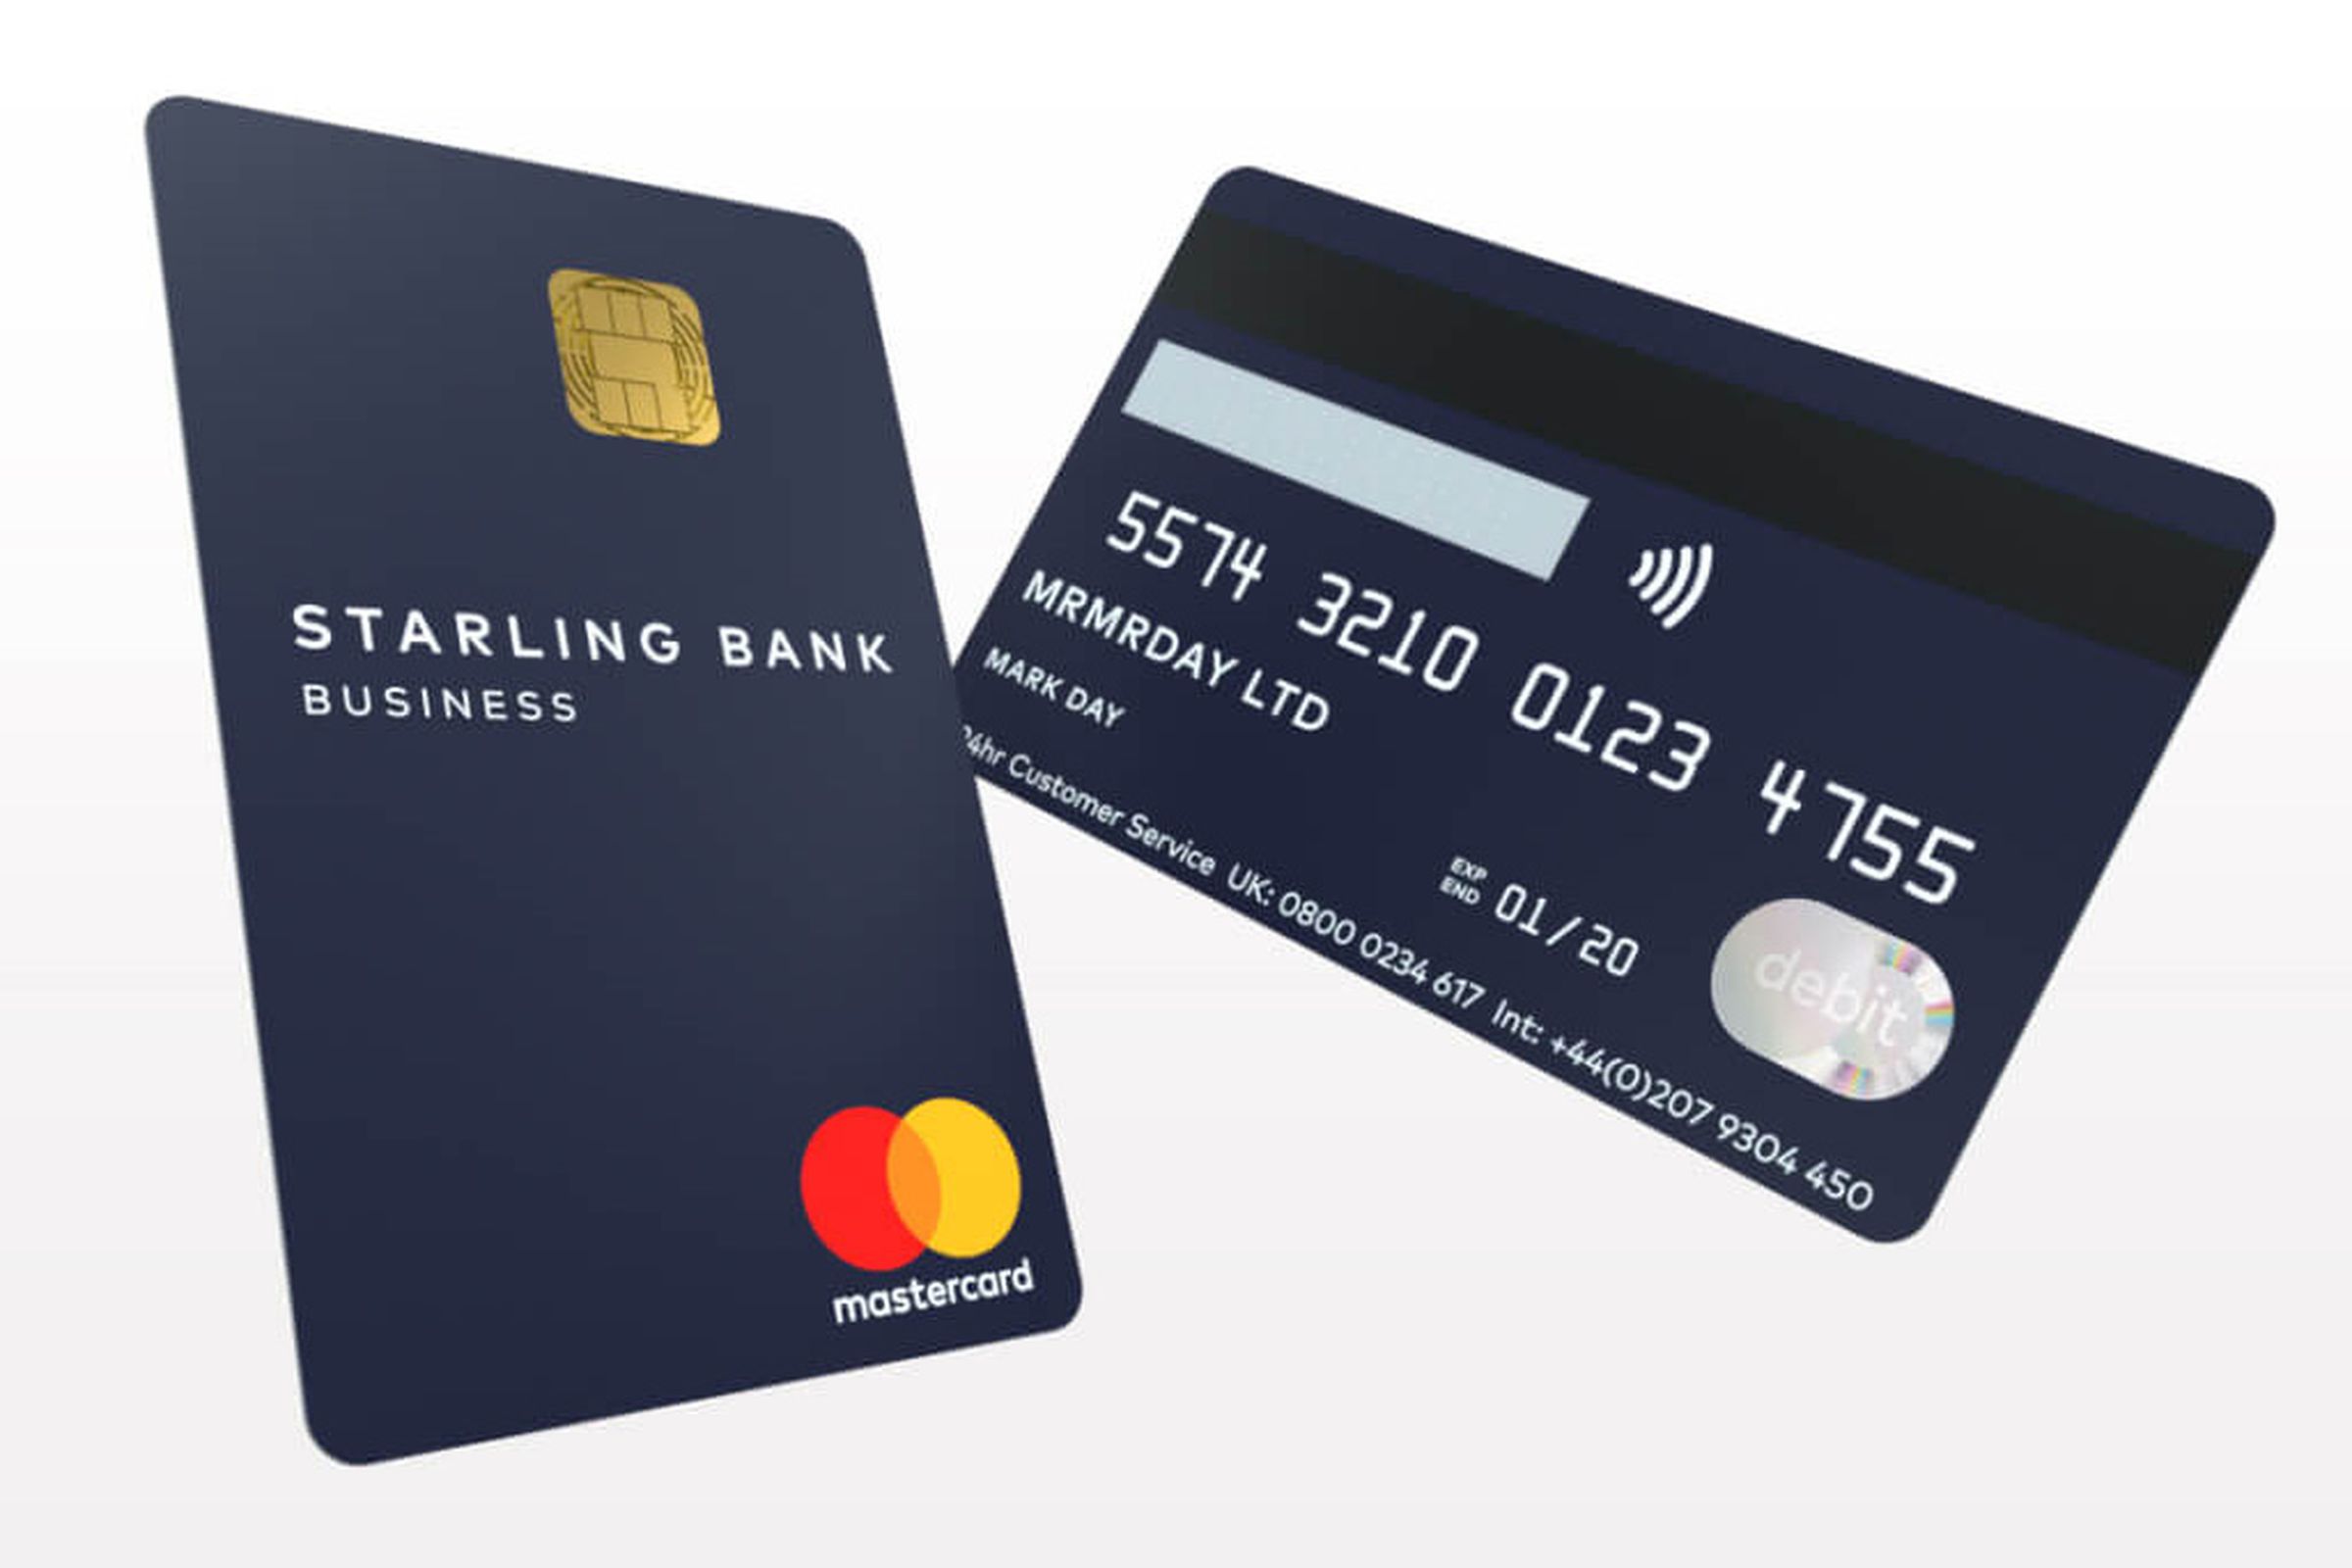 Starling Bank’s portrait Mastercard debit card